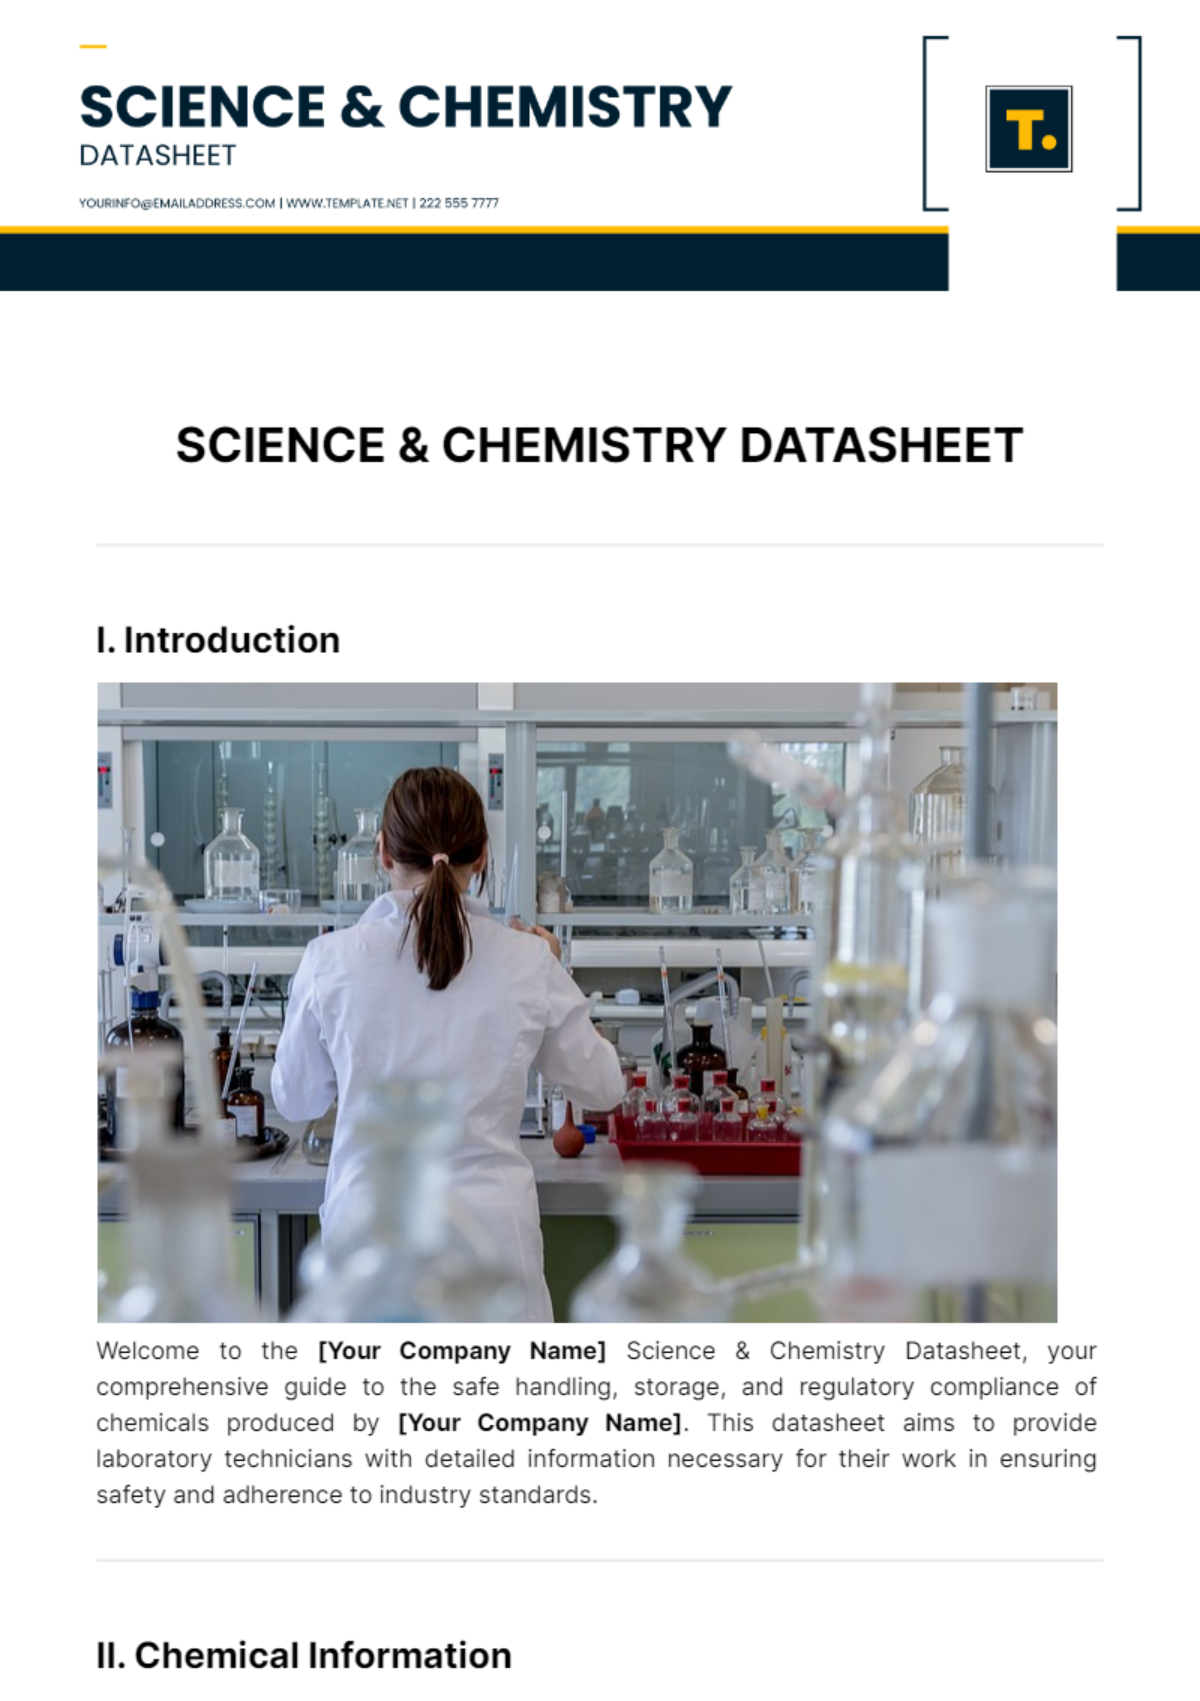 Free Science & Chemistry Datasheet Template